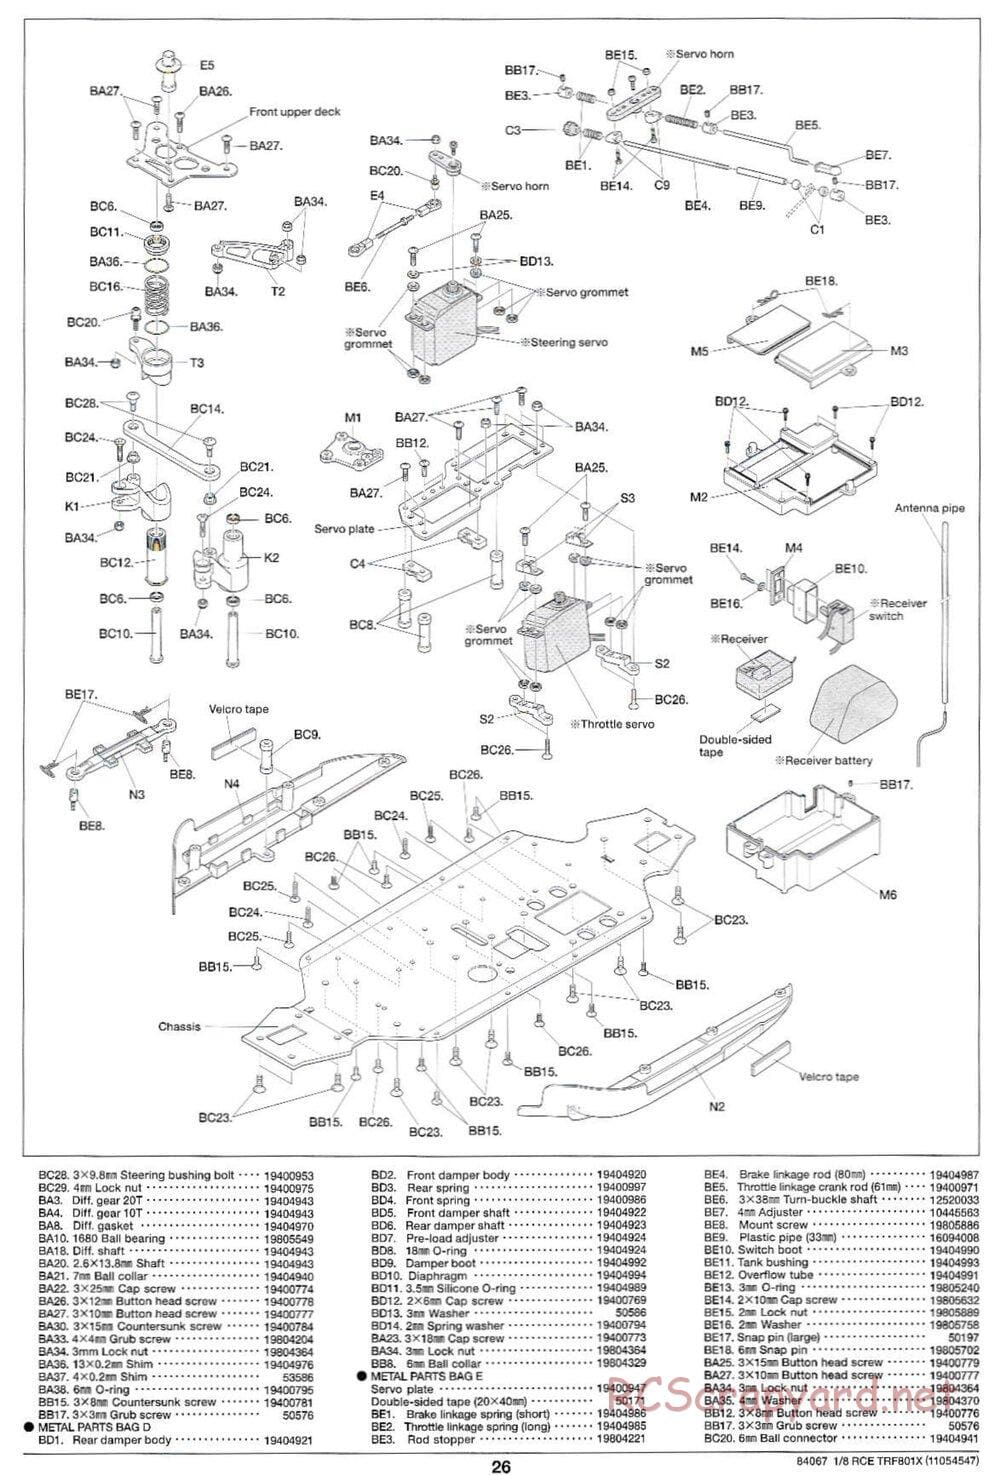 Tamiya - TRF801X Chassis - Manual - Page 26